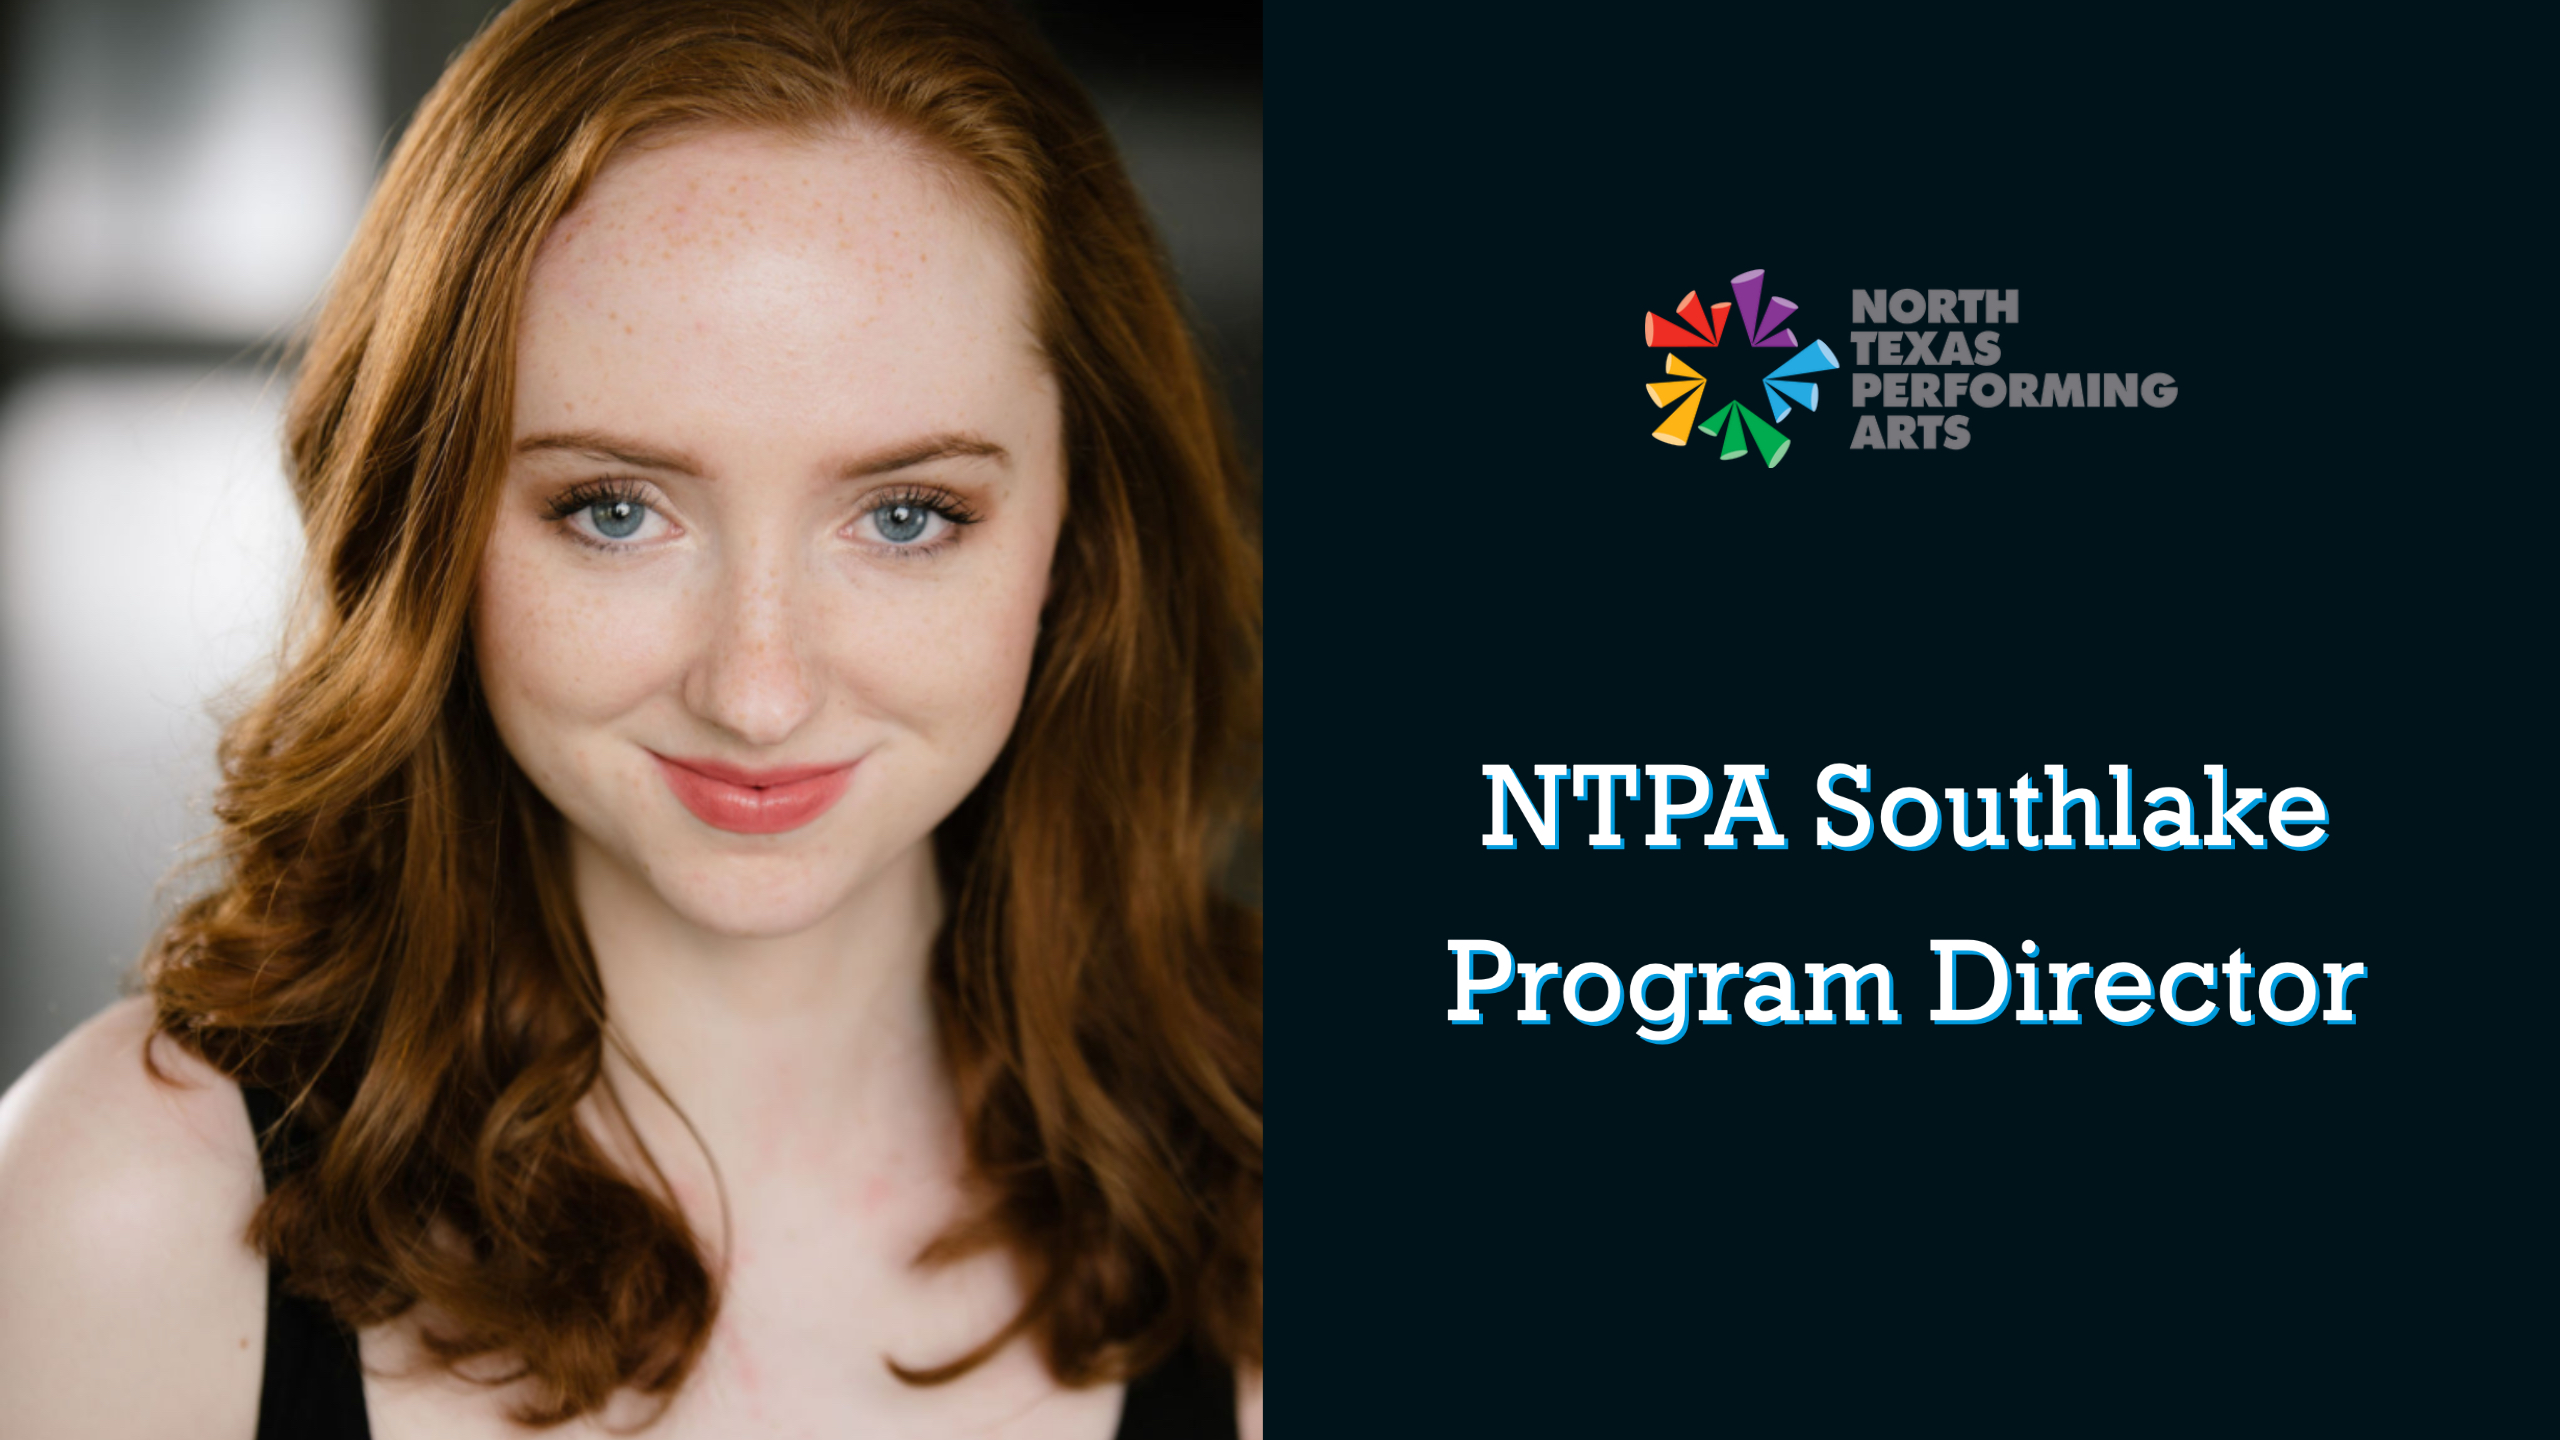 NTPA announces Paige Price as NTPA Southlake Program Director